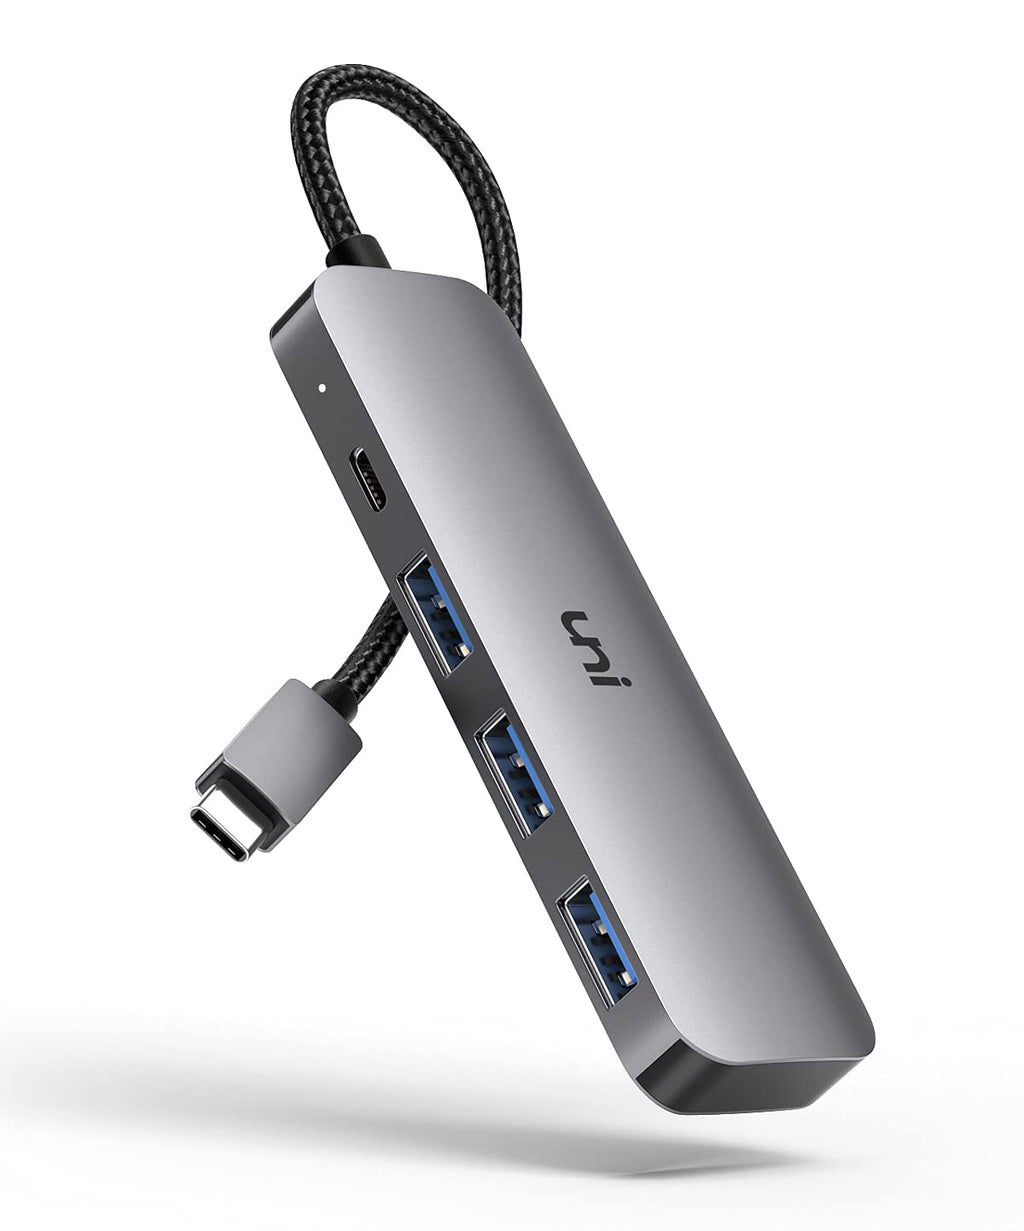 USB C Hub, uni 4-in-1 USB C Adapter with 3 USB 3.0 Ports, 100W USB-C PD Charging Port Thunderbolt 3, USB Type C to USB 3.0 Adapter (Aluminum Shell) for MacBook Pro, iPad Pro, XPS, Pixelbook, and More - LeoForward Australia